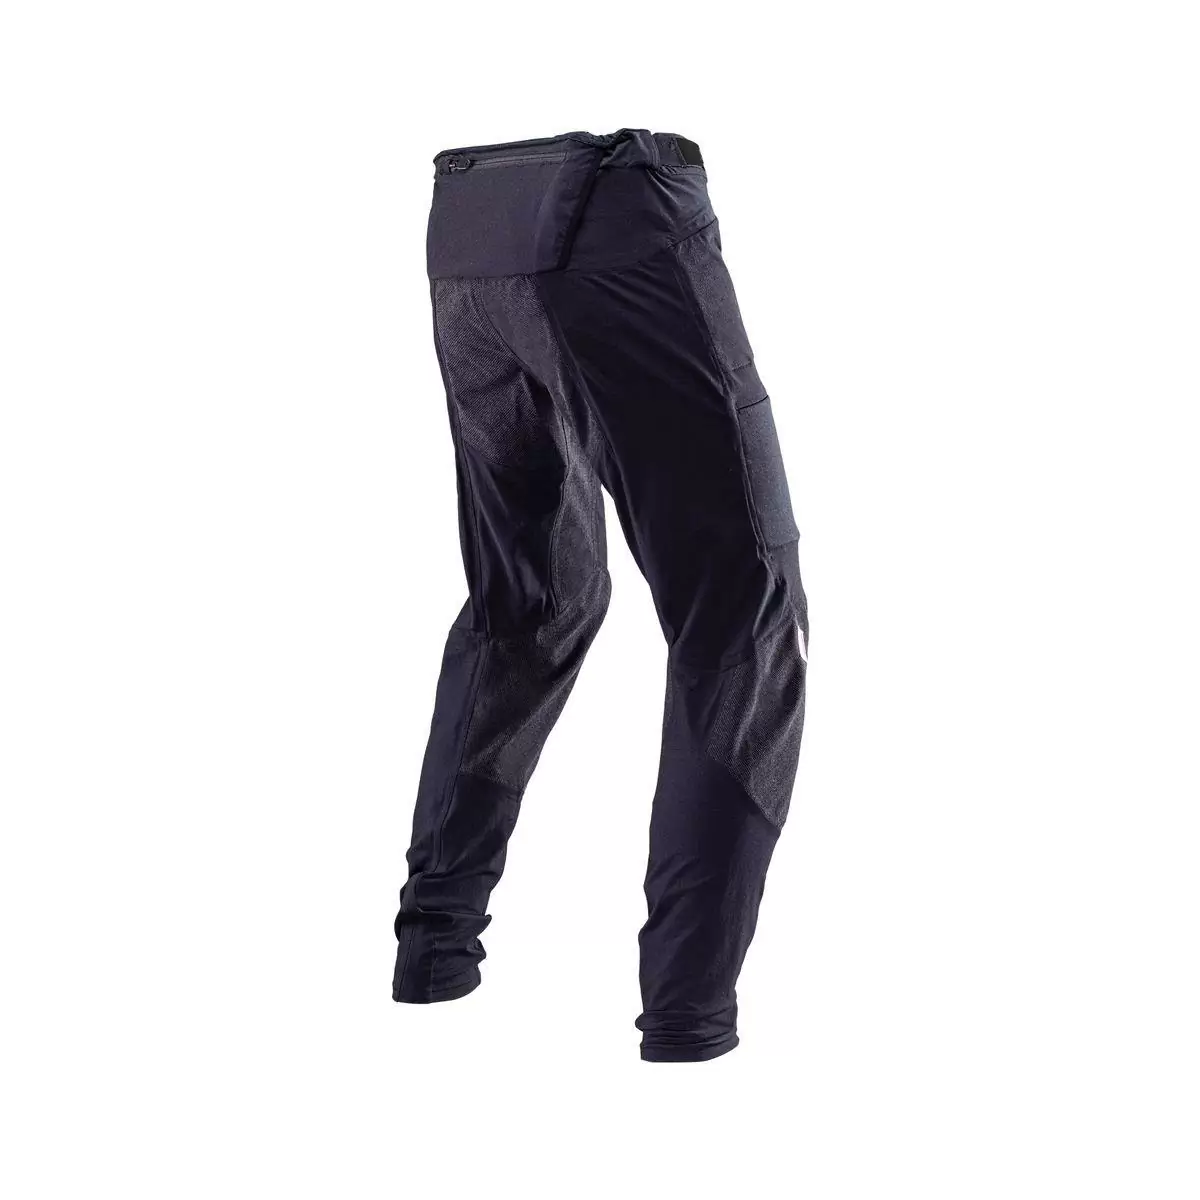 Pantalones MTB Allmtn 4.0 Largos Negro Talla M #3